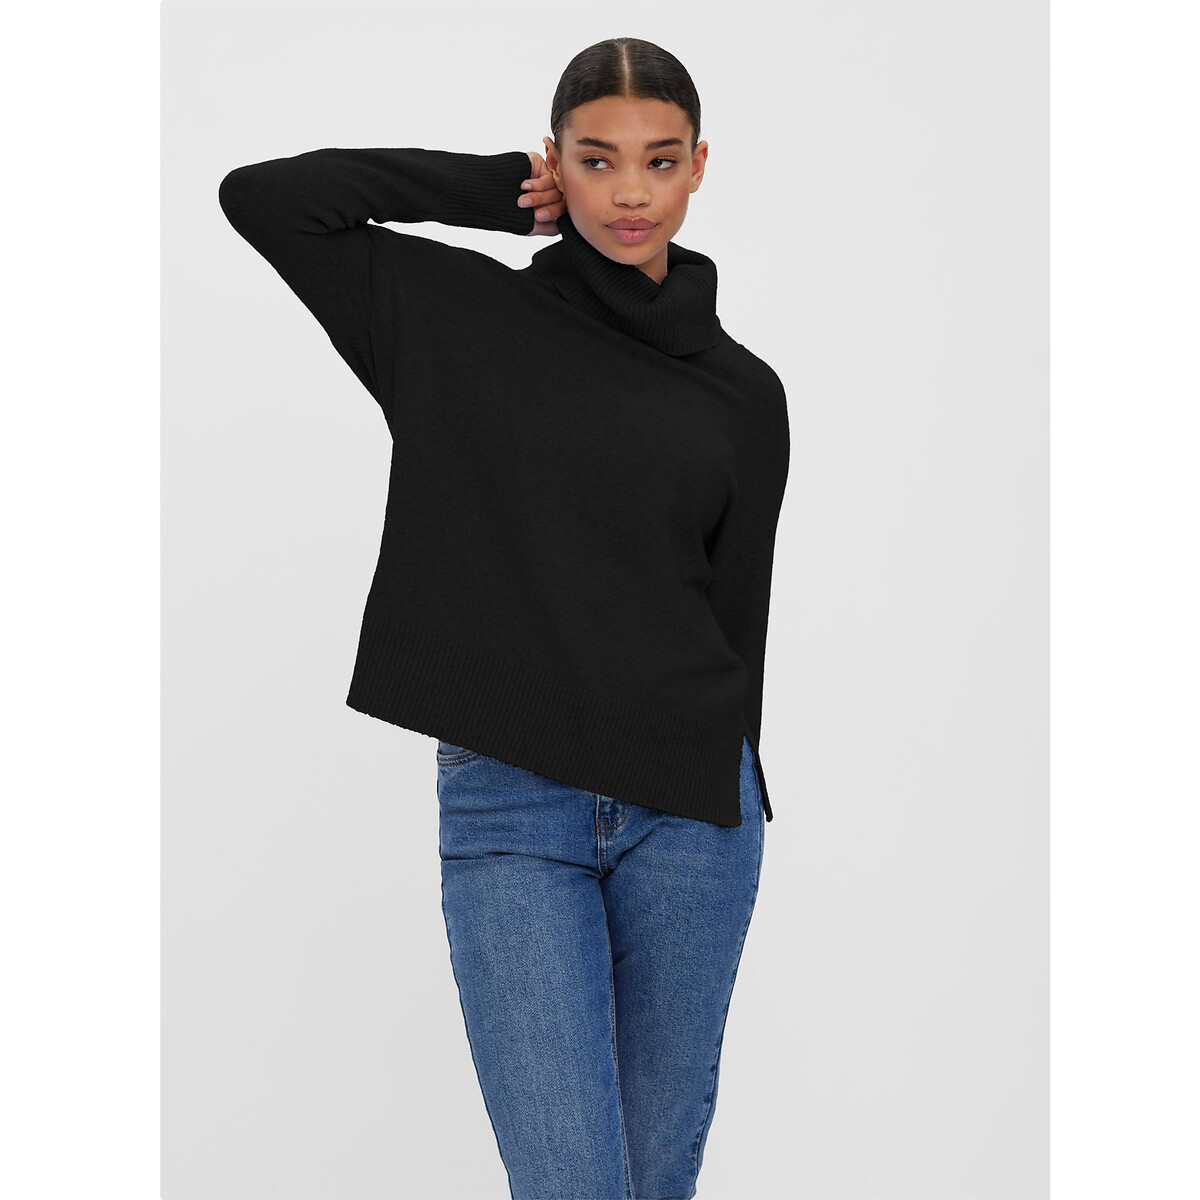 Пуловер с высоким воротником из тонкого трикотажа XS черный пуловер с высоким воротником из трикотажа с витым узором l бежевый